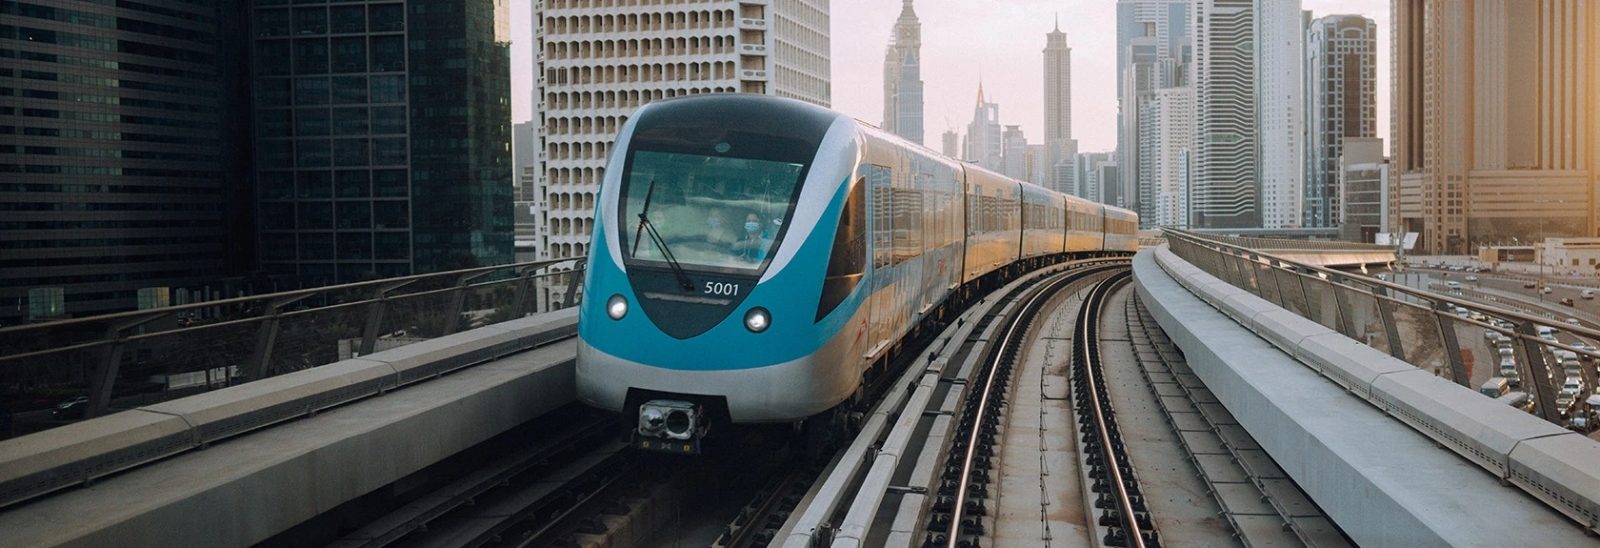 Дубайское метро поезд